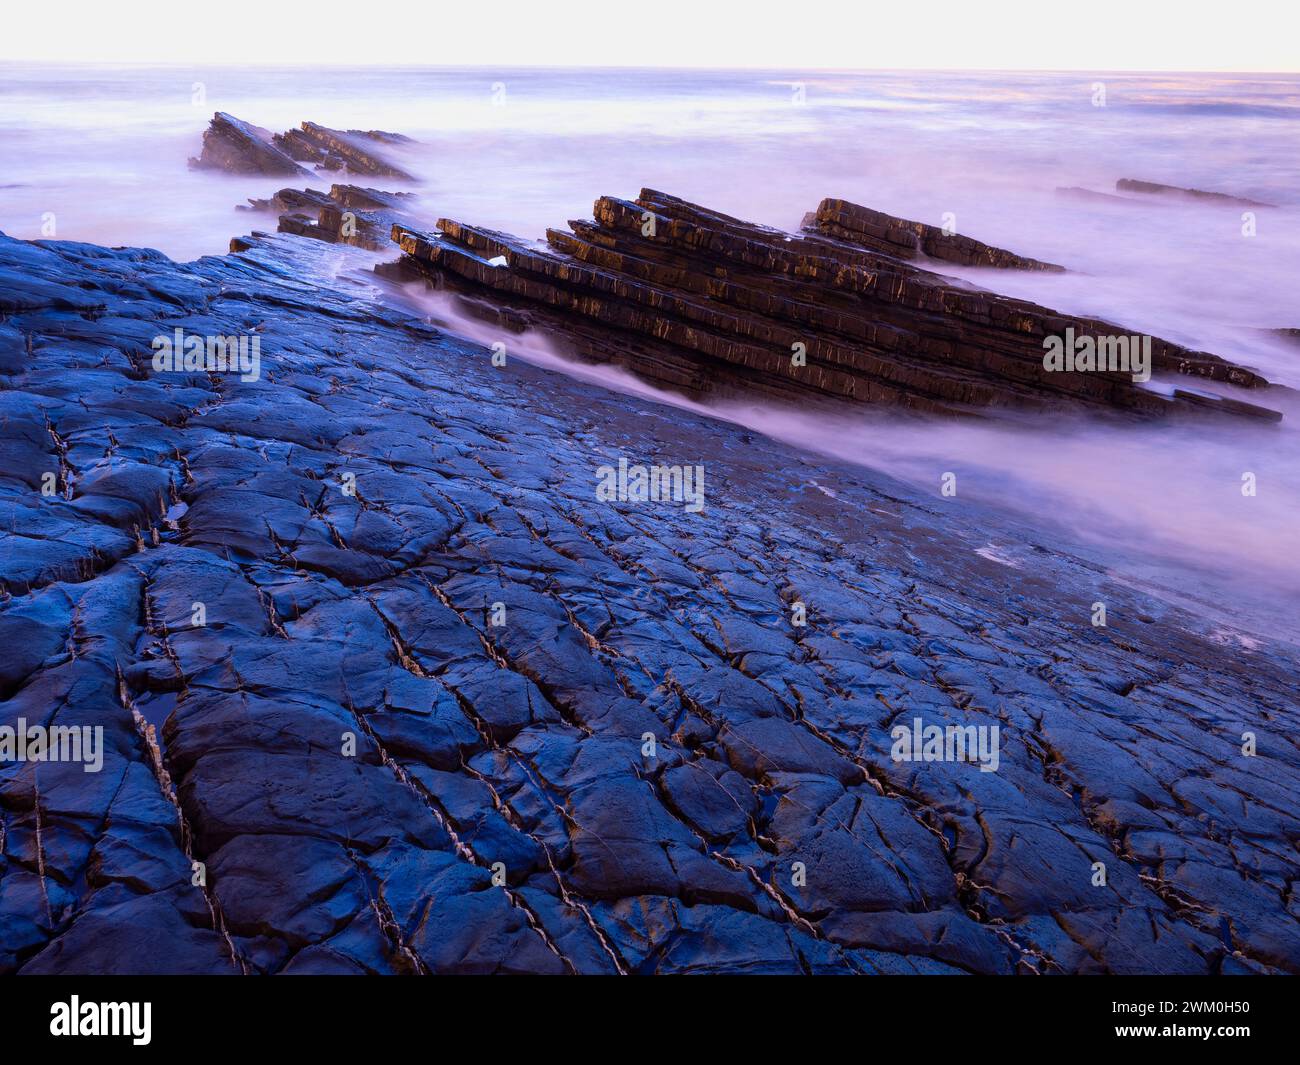 Portugal, Alentejo, Zambujeira do Mar, Long exposure of rocky beach at dusk Stock Photo